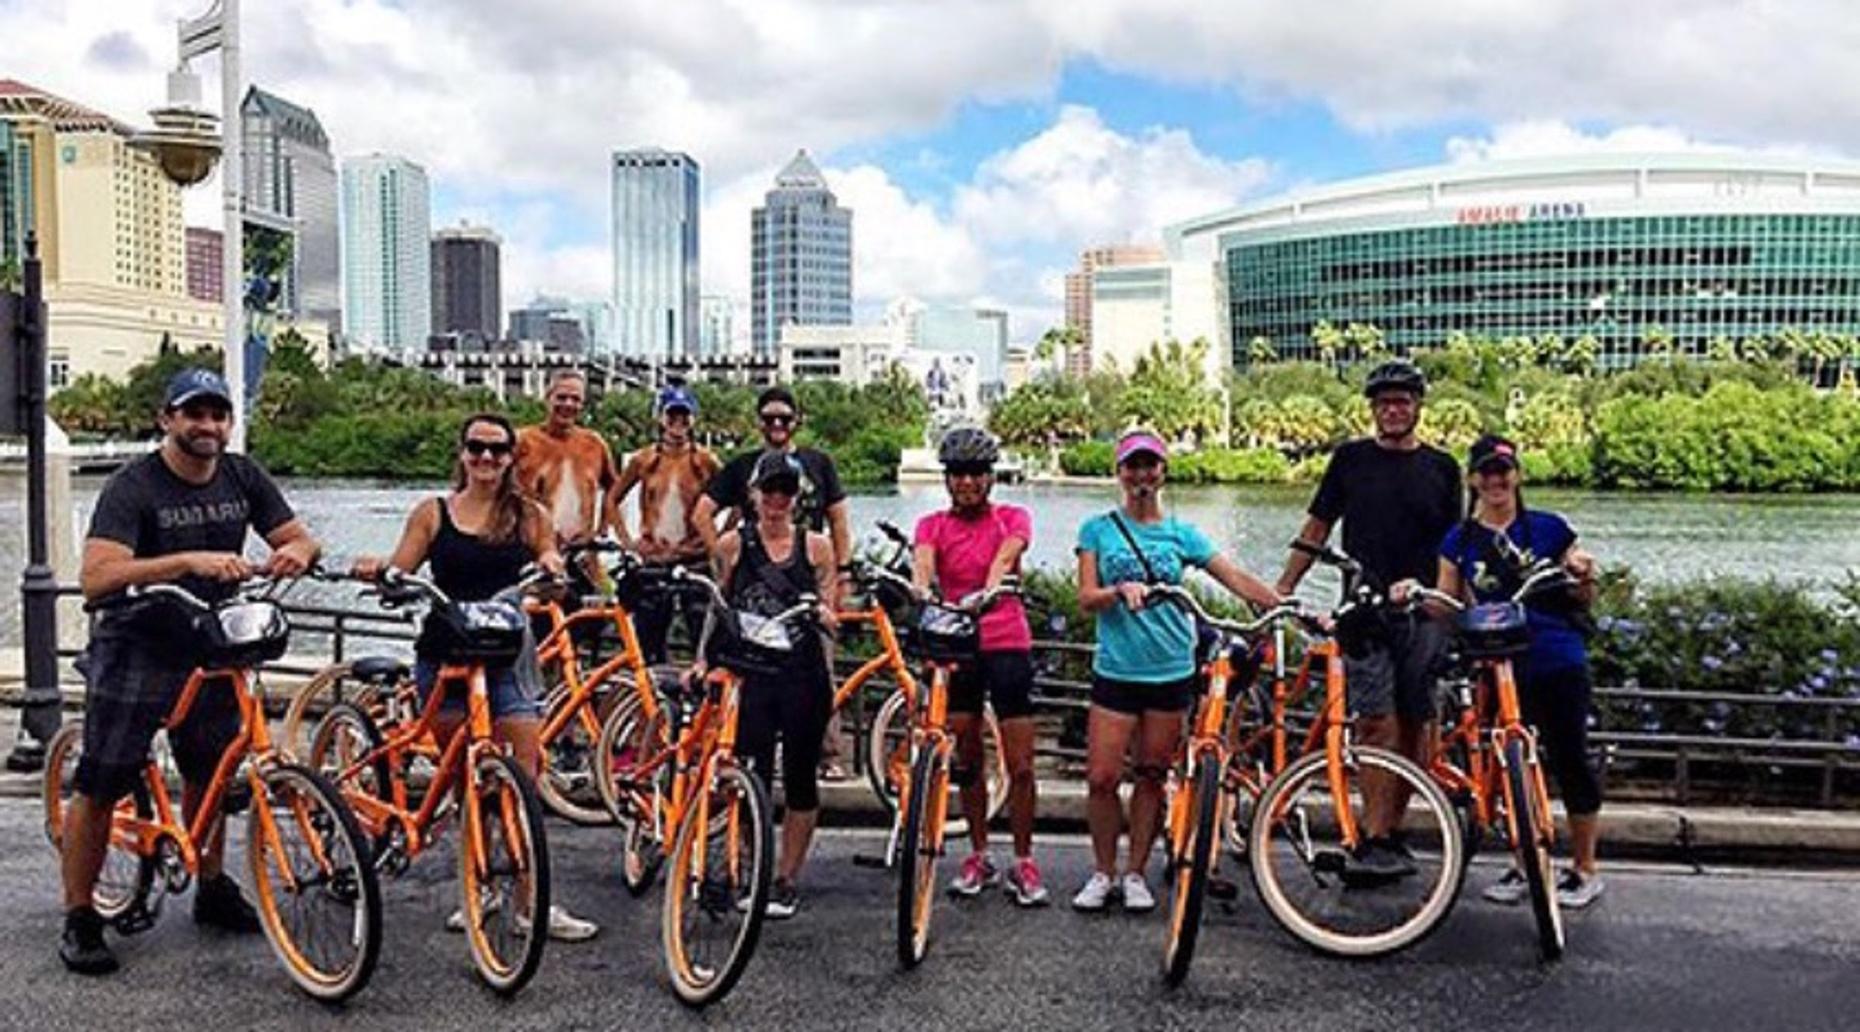 City Showcase Bike Tour in Tampa Bay